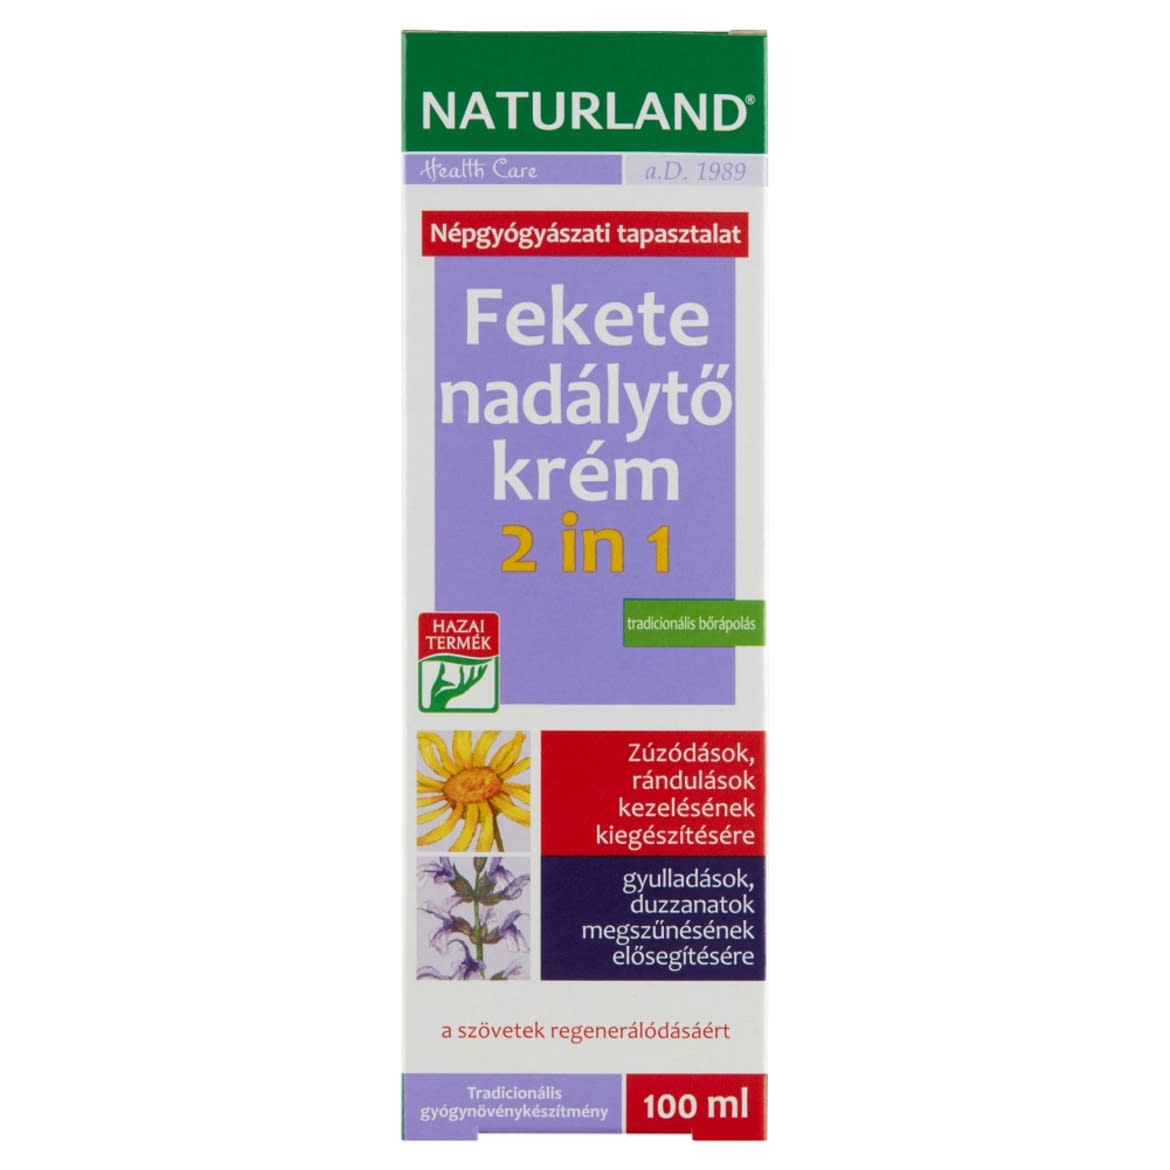 Naturland Health Care 2 in 1 fekete nadÃ¡lytÅ‘ krÃ©m